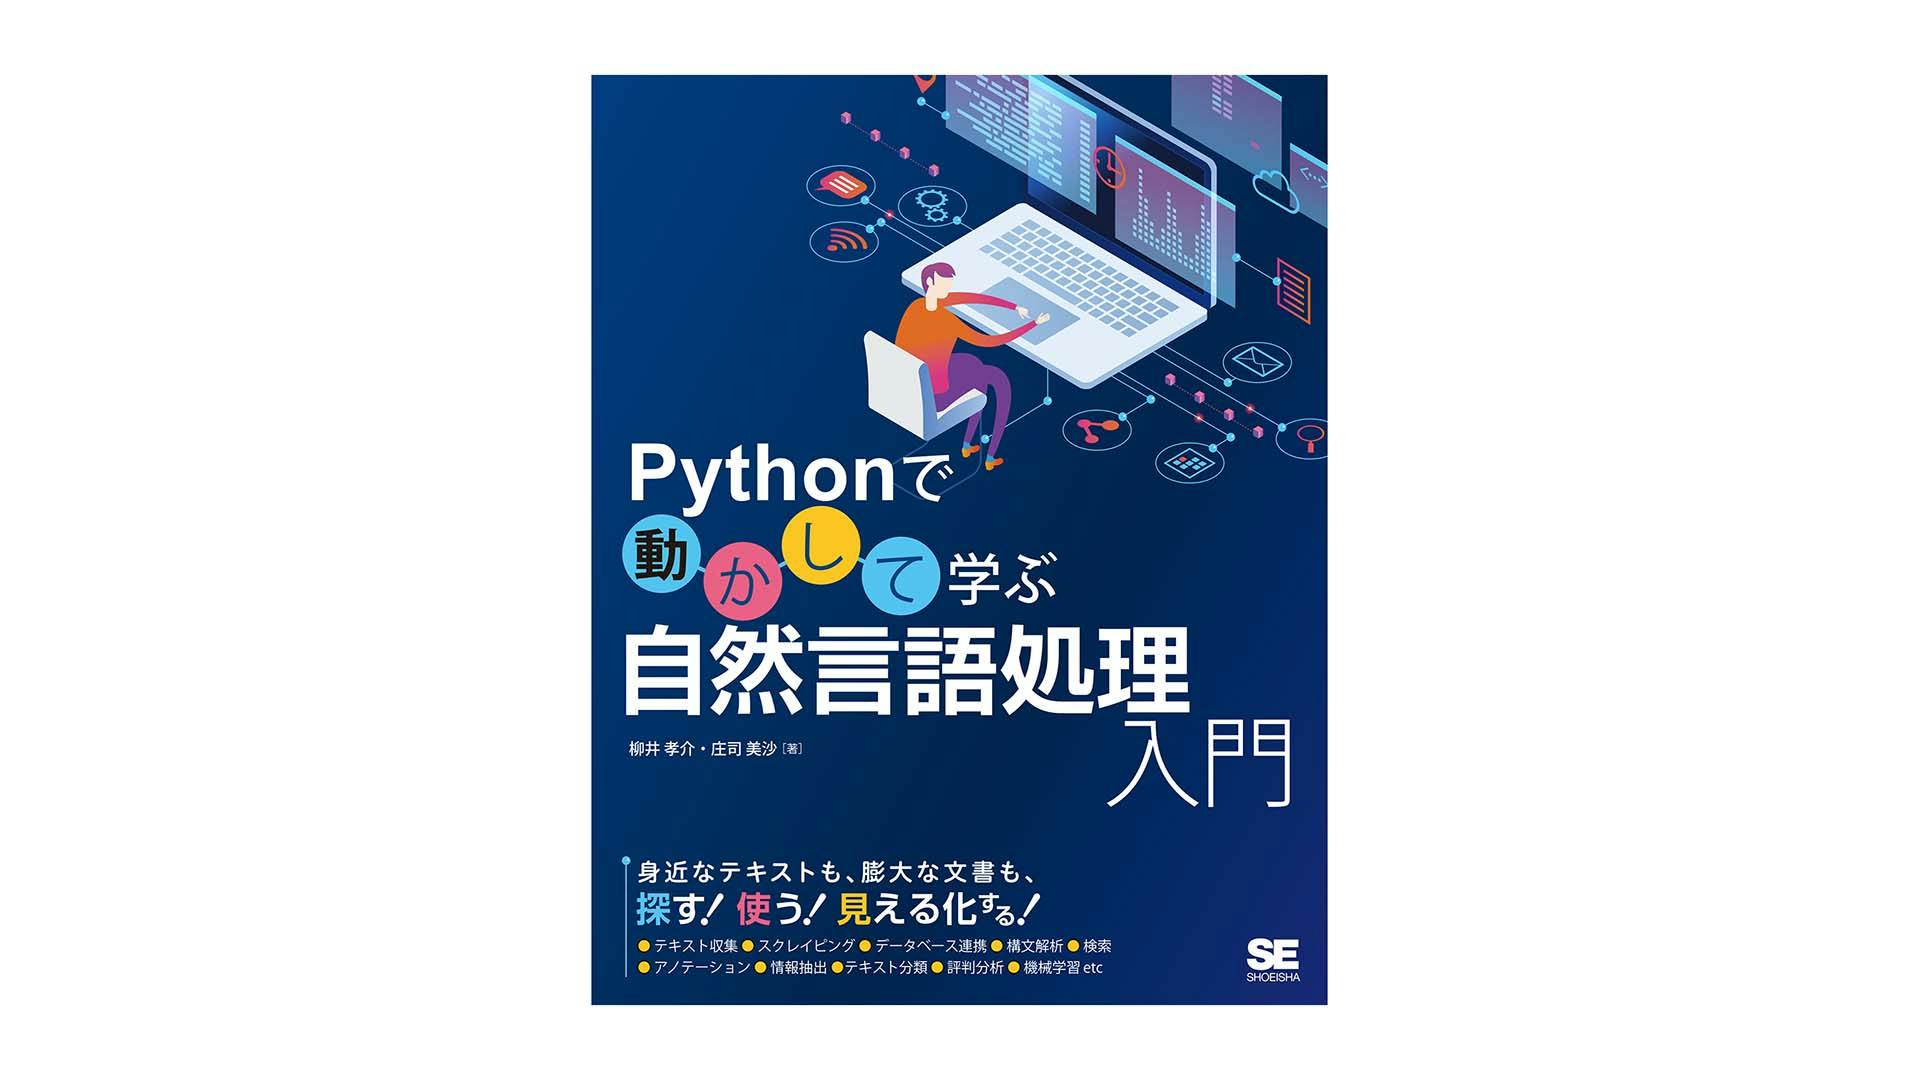 Cover Image for 「Pythonで動かして学ぶ 自然言語処理入門」を読んだ